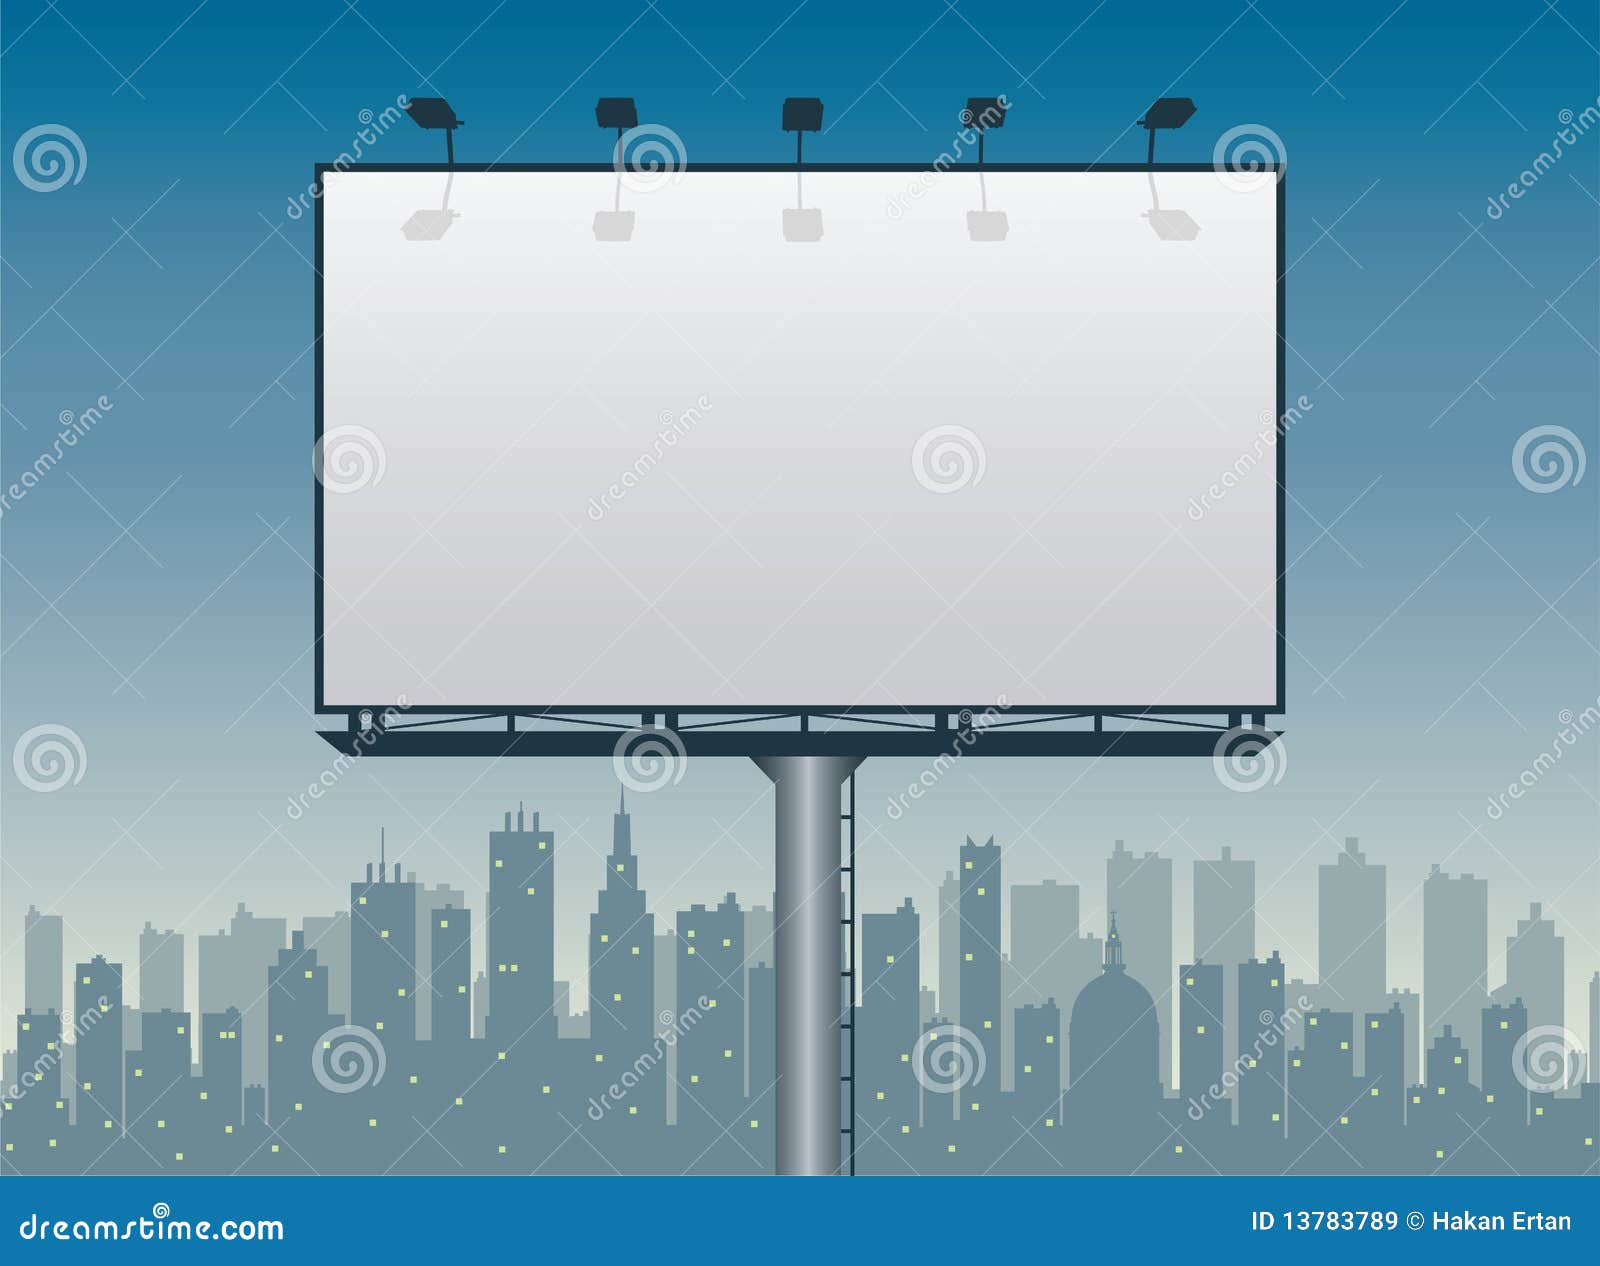 city billboard